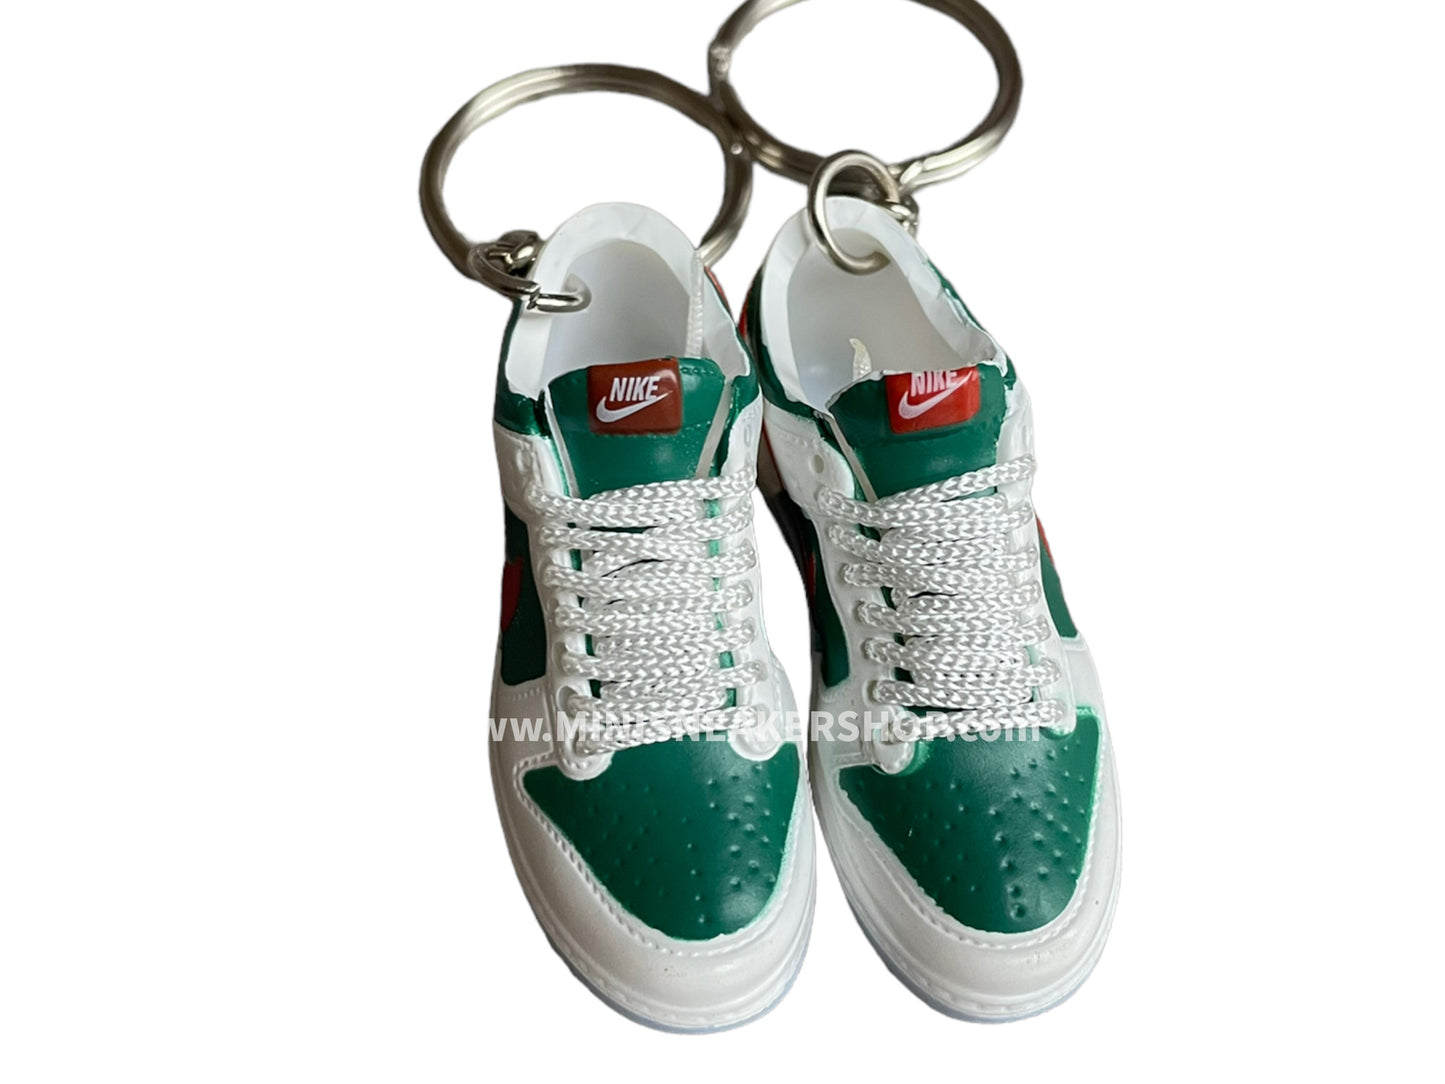 Mini sneaker keychain 3D Dunk - NYKS